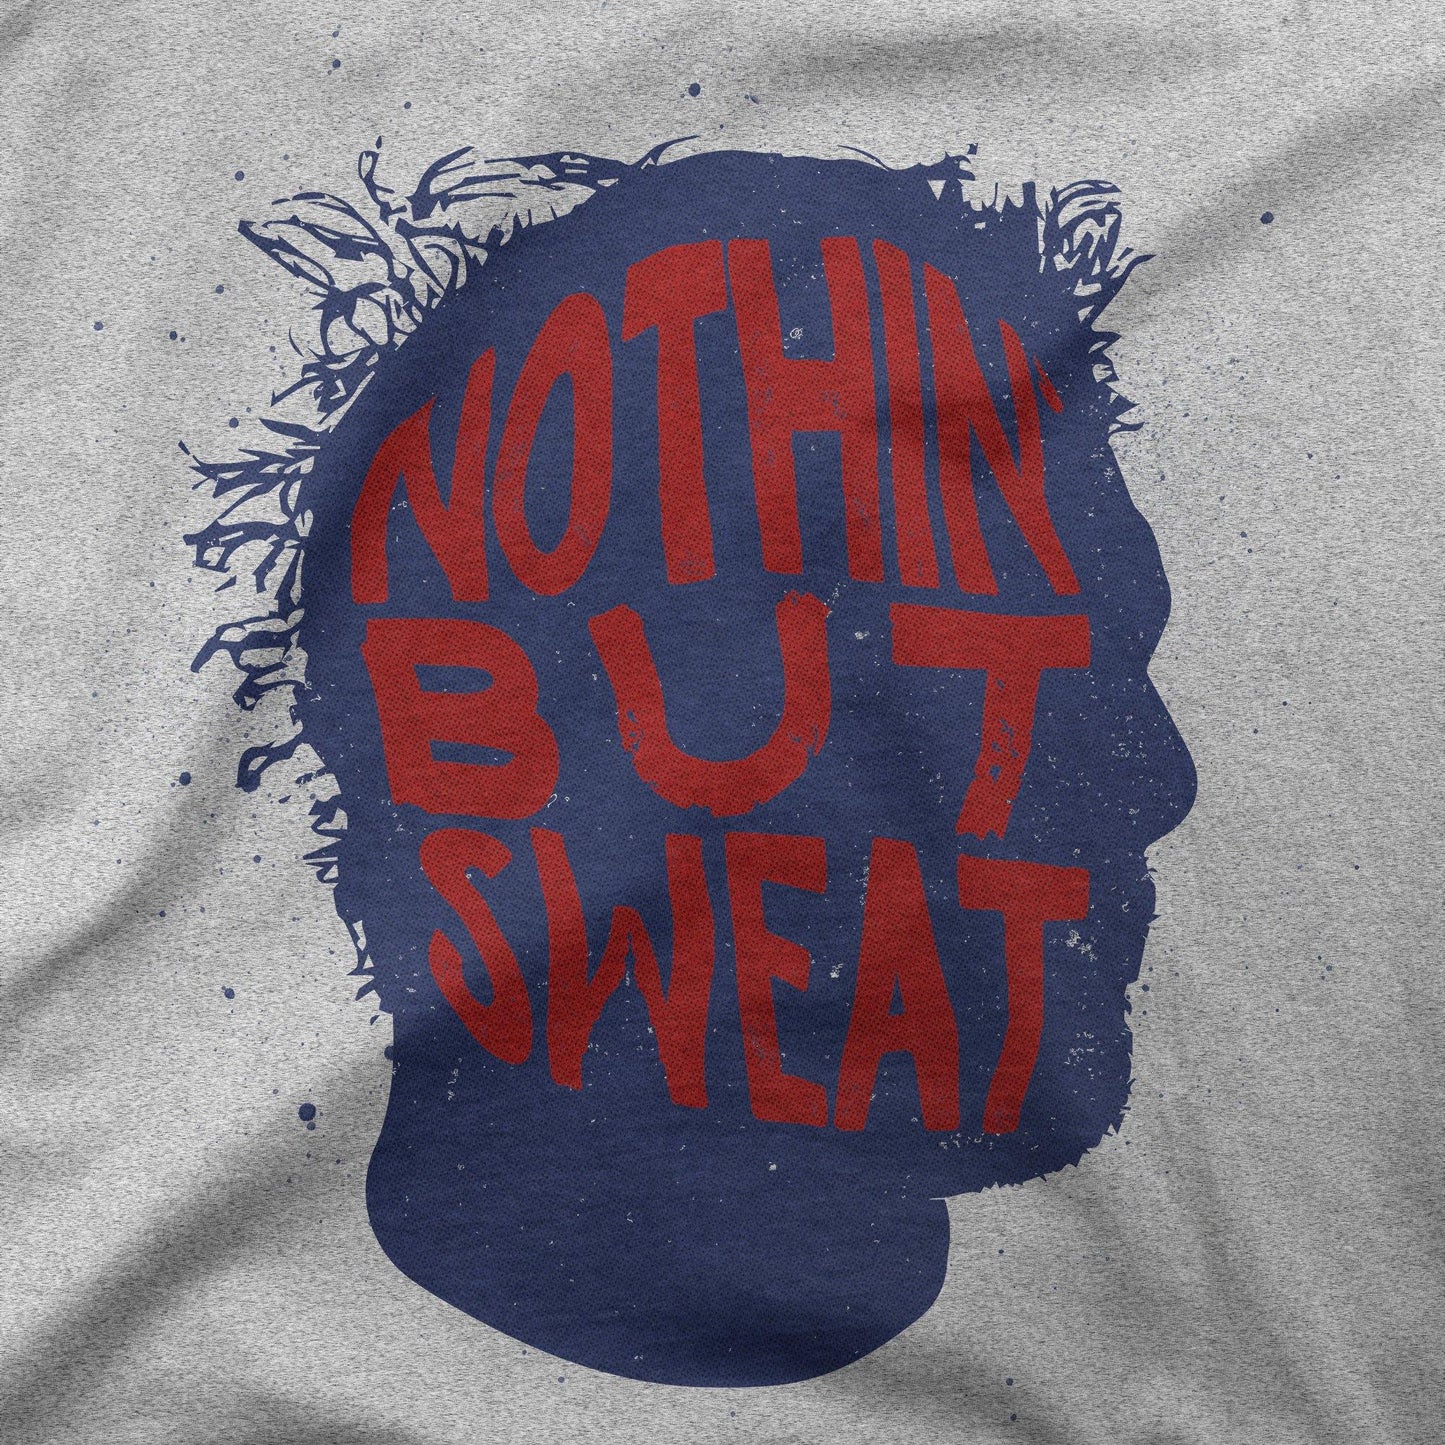 Nothin' But Sweat | T-Shirt - Jomboy Media